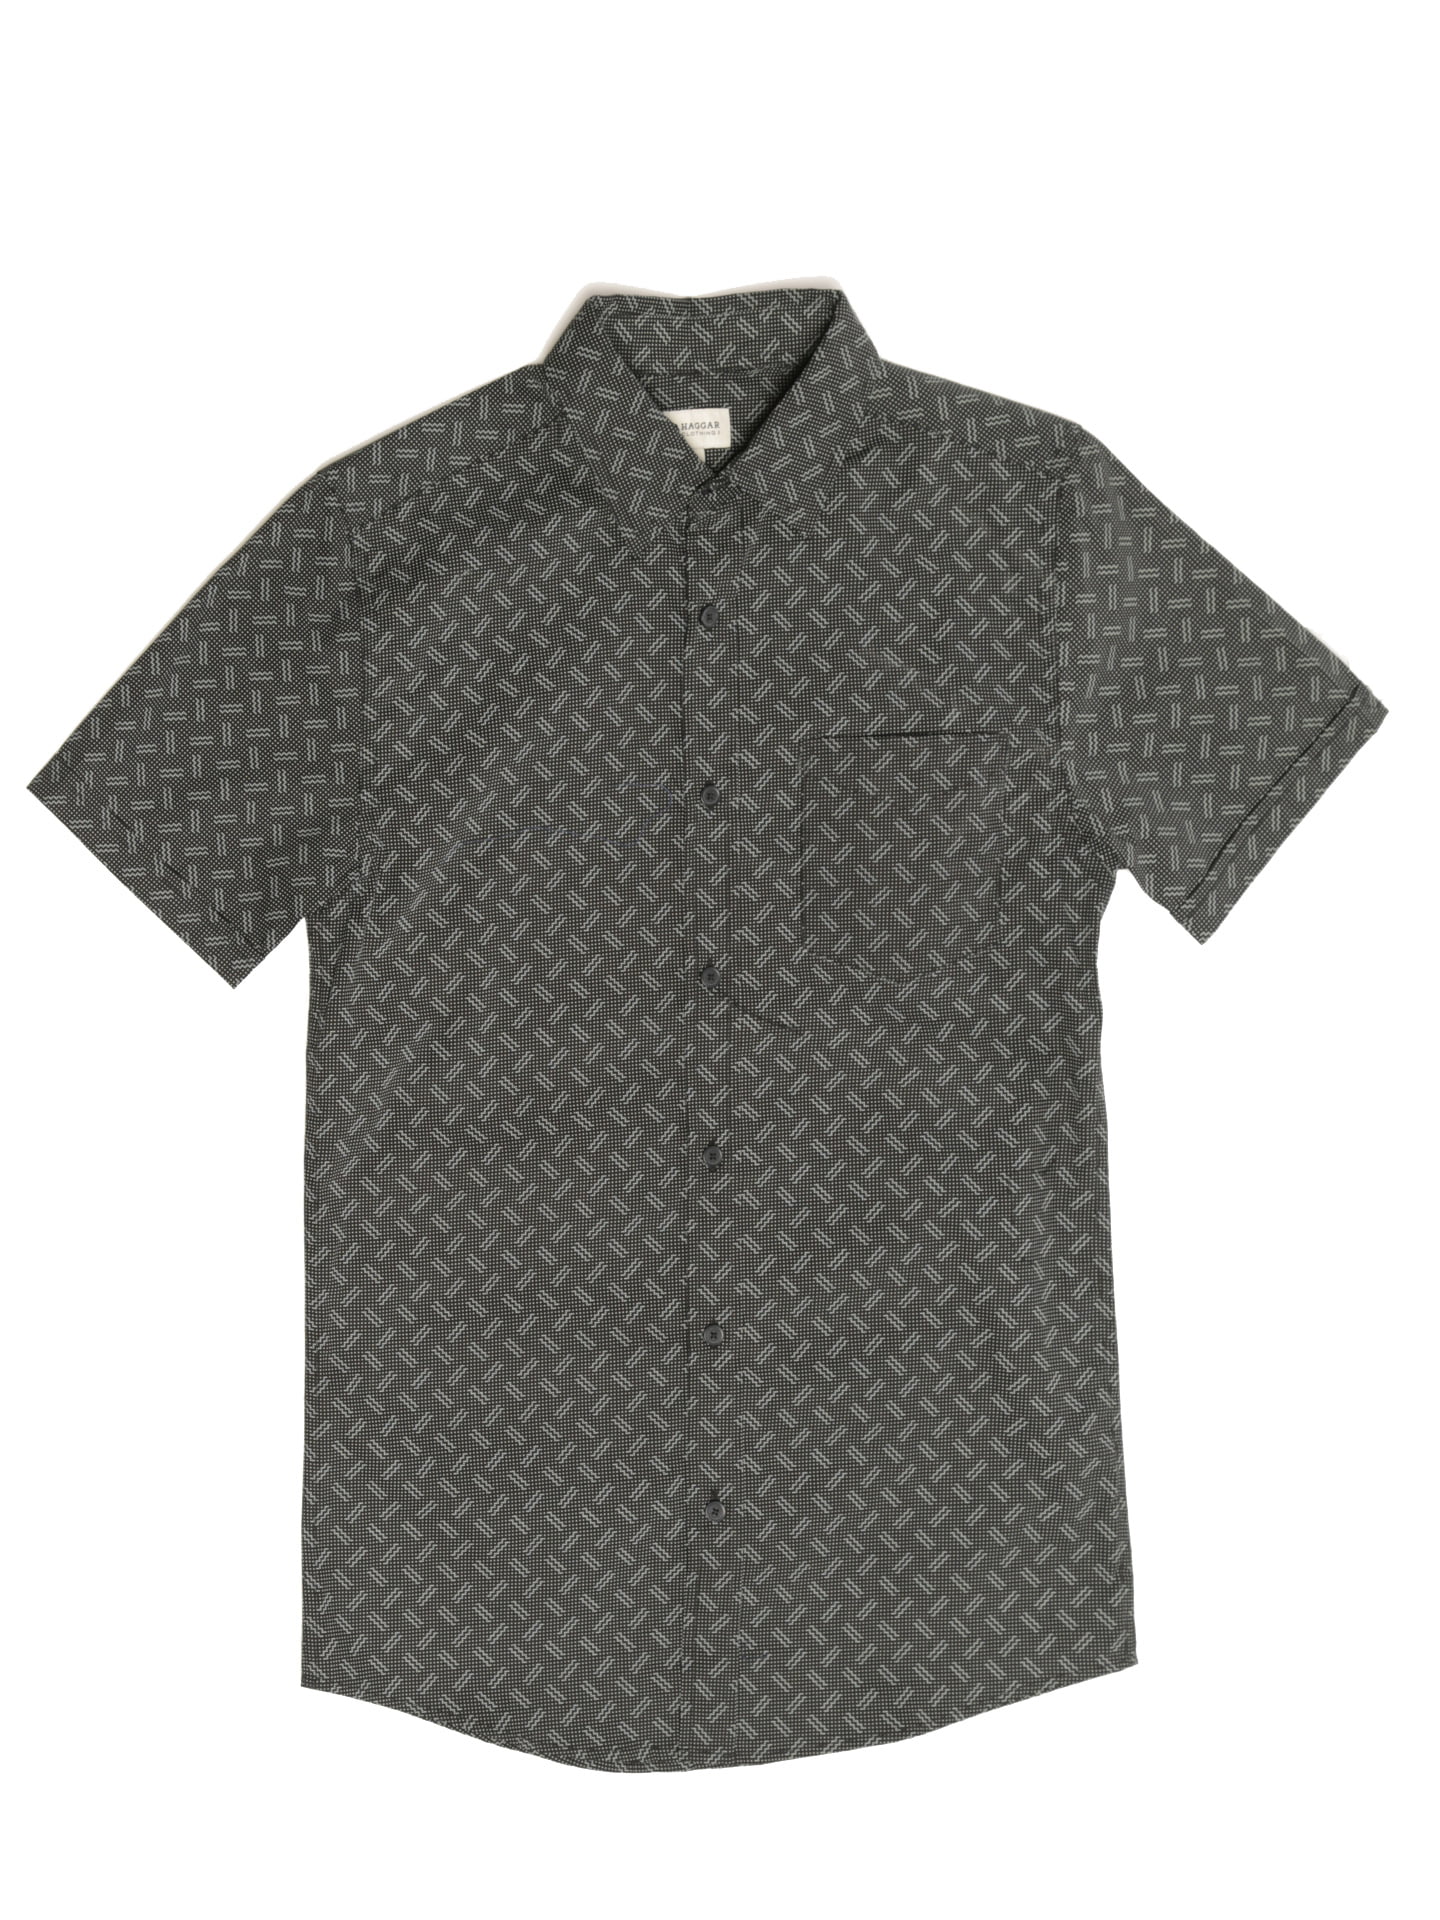 Haggar Men's Short Sleeve Print Button Down, Black, Small - Walmart.com